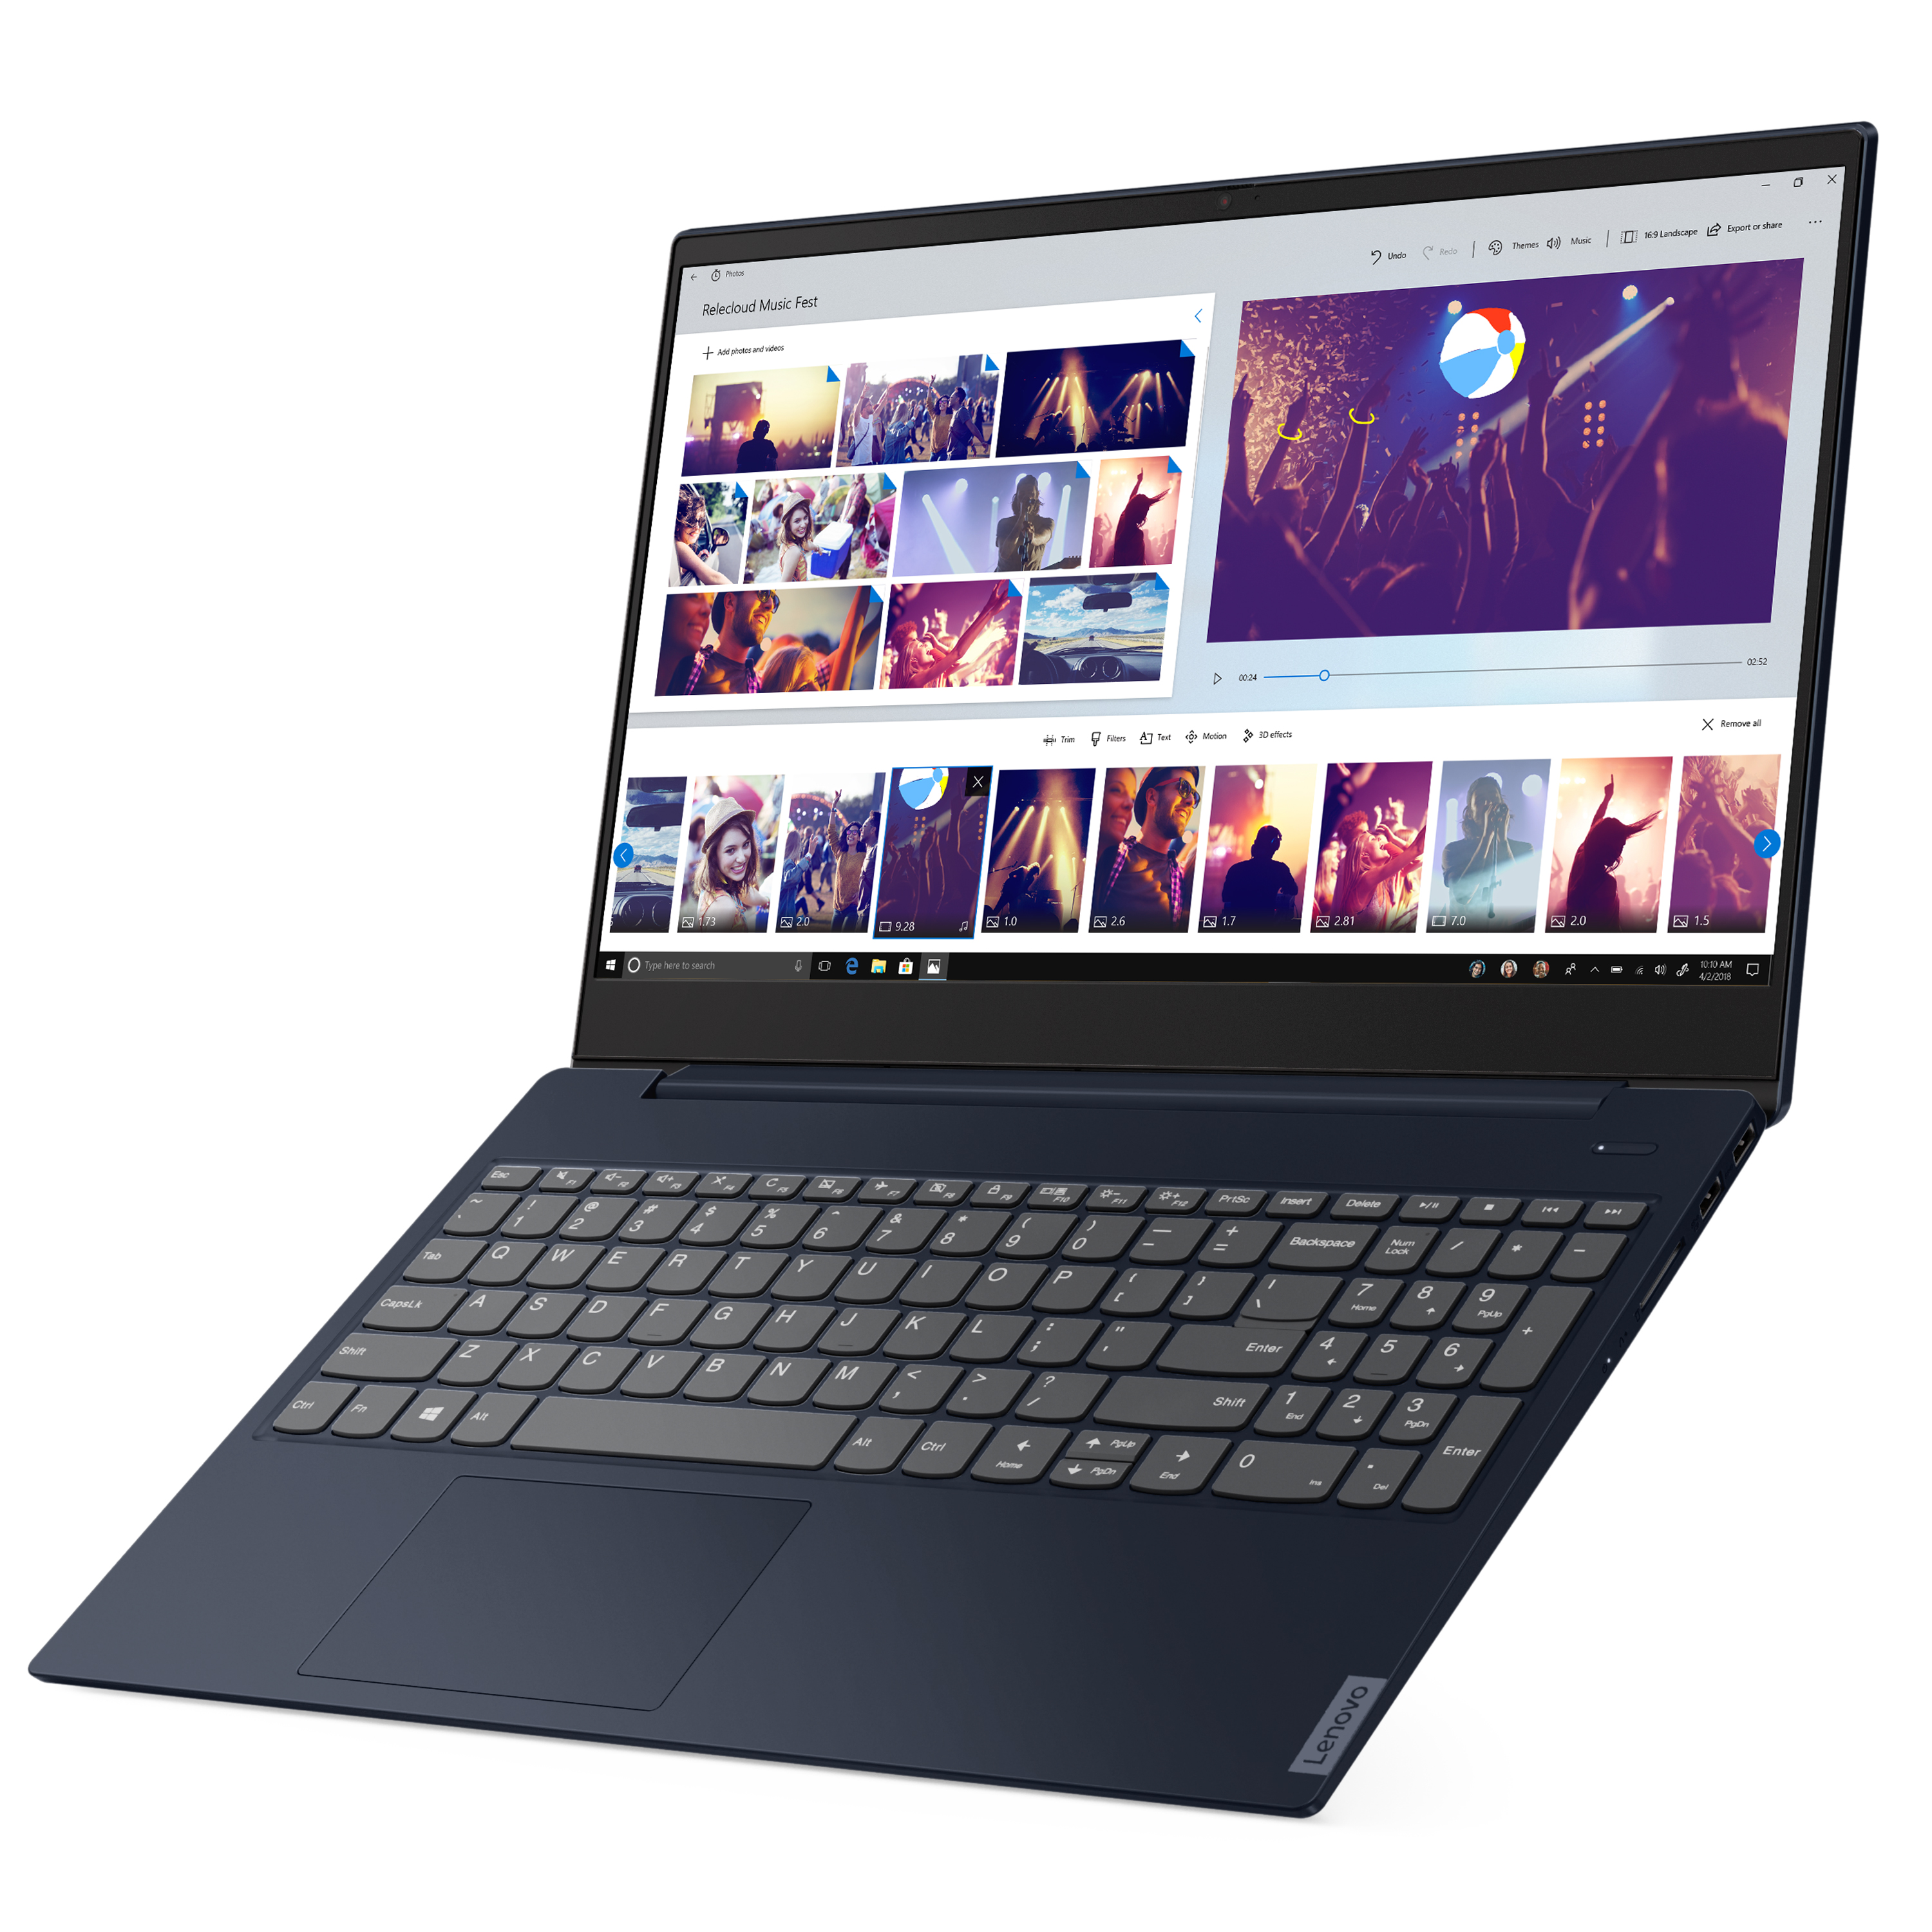 Lenovo ideapad S340 ( 81N800H2US) 15.6″ Laptop with 8th Gen Core i5 Quad-Core, 8GB RAM, 128GB SSD